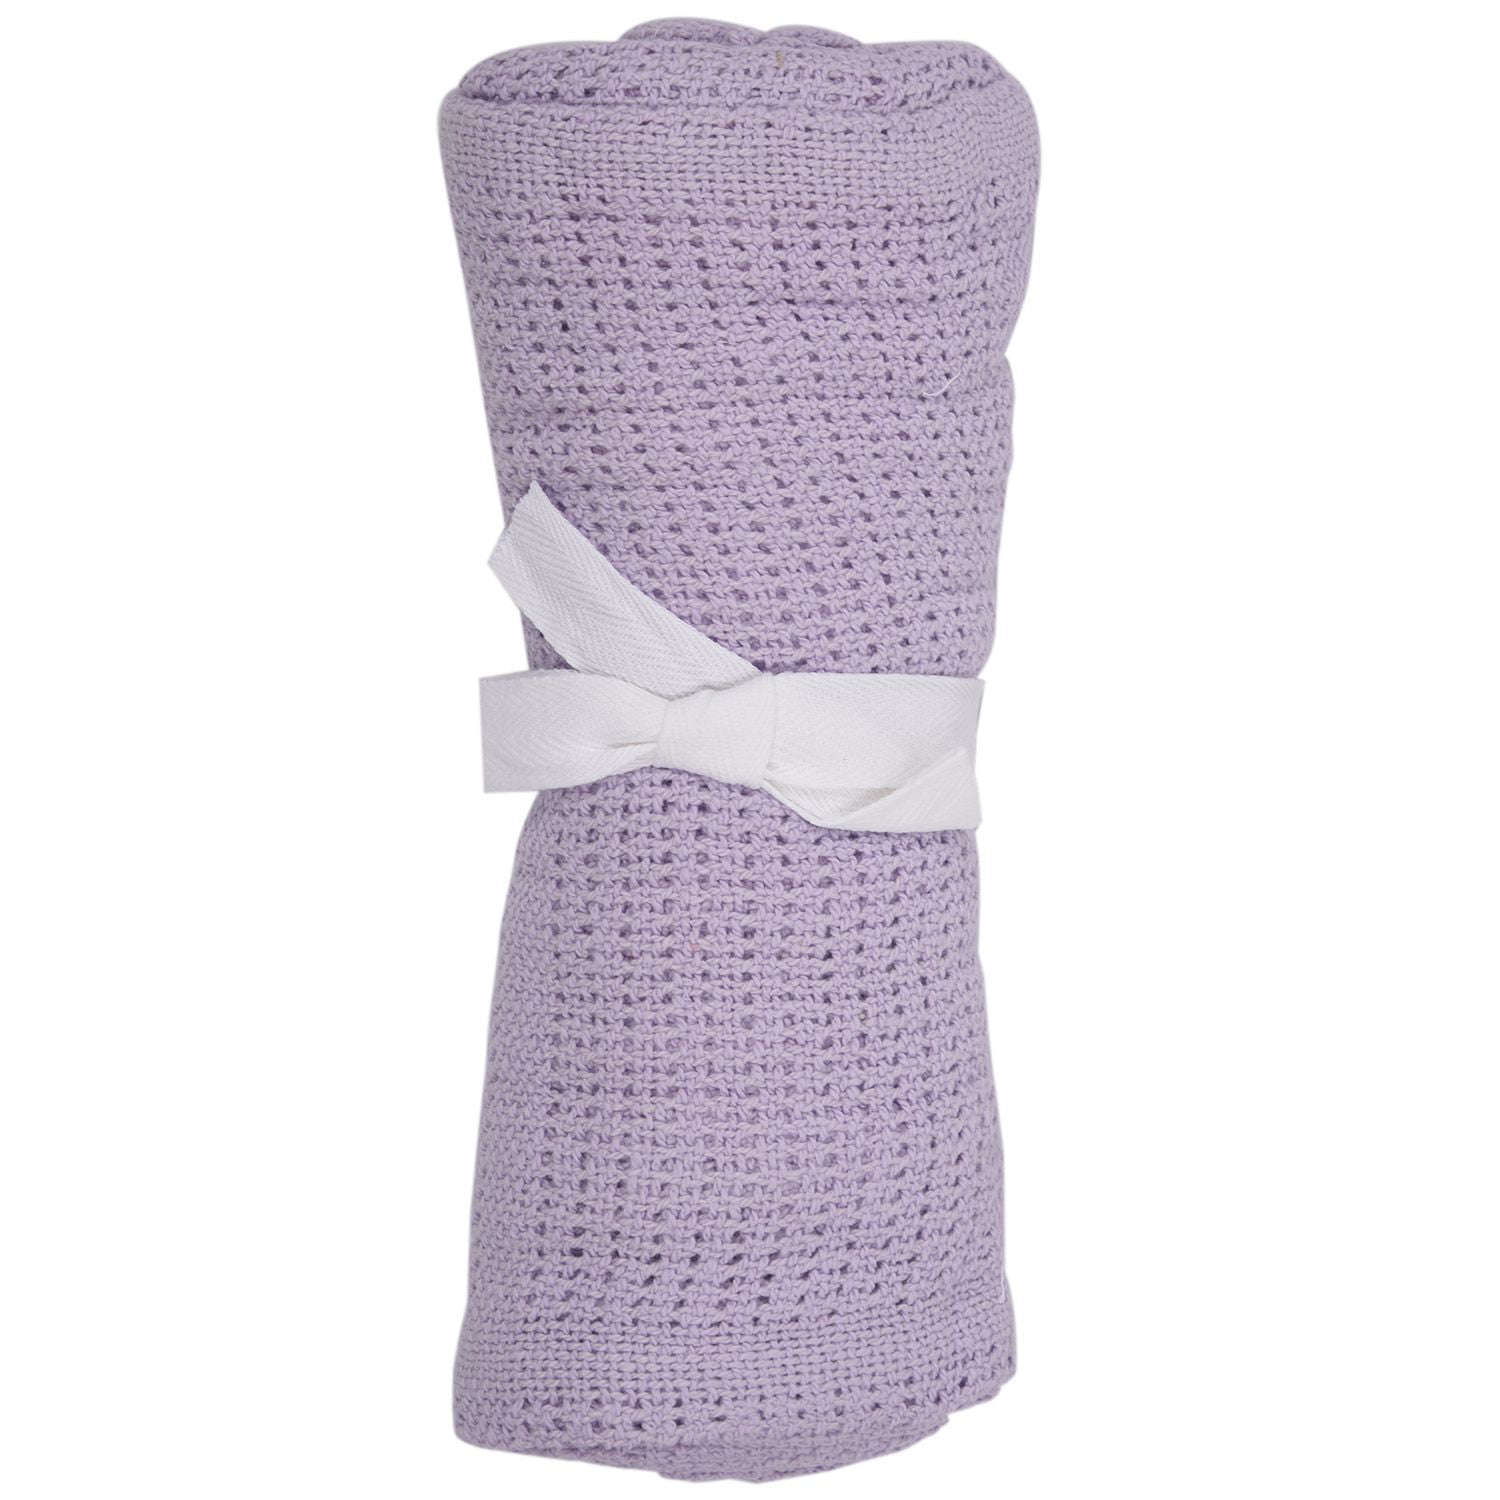 Super Soft Fleece Blanket Comfort Pram Moses Crib Basket Warm Blanket Baby New 